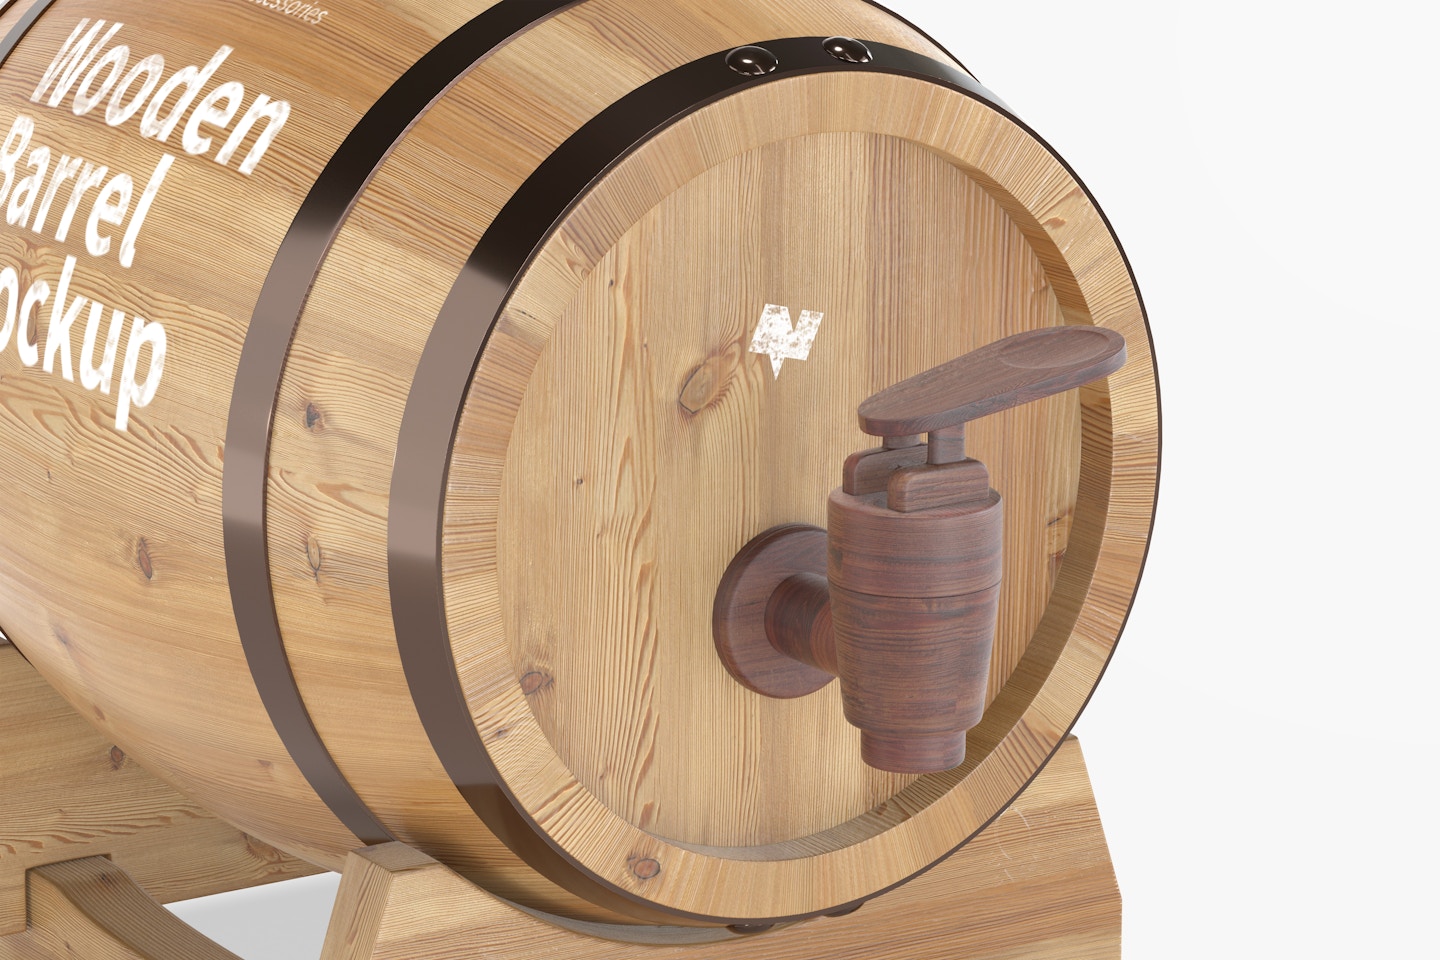 Wooden Barrel on Stand Mockup, Close-Up